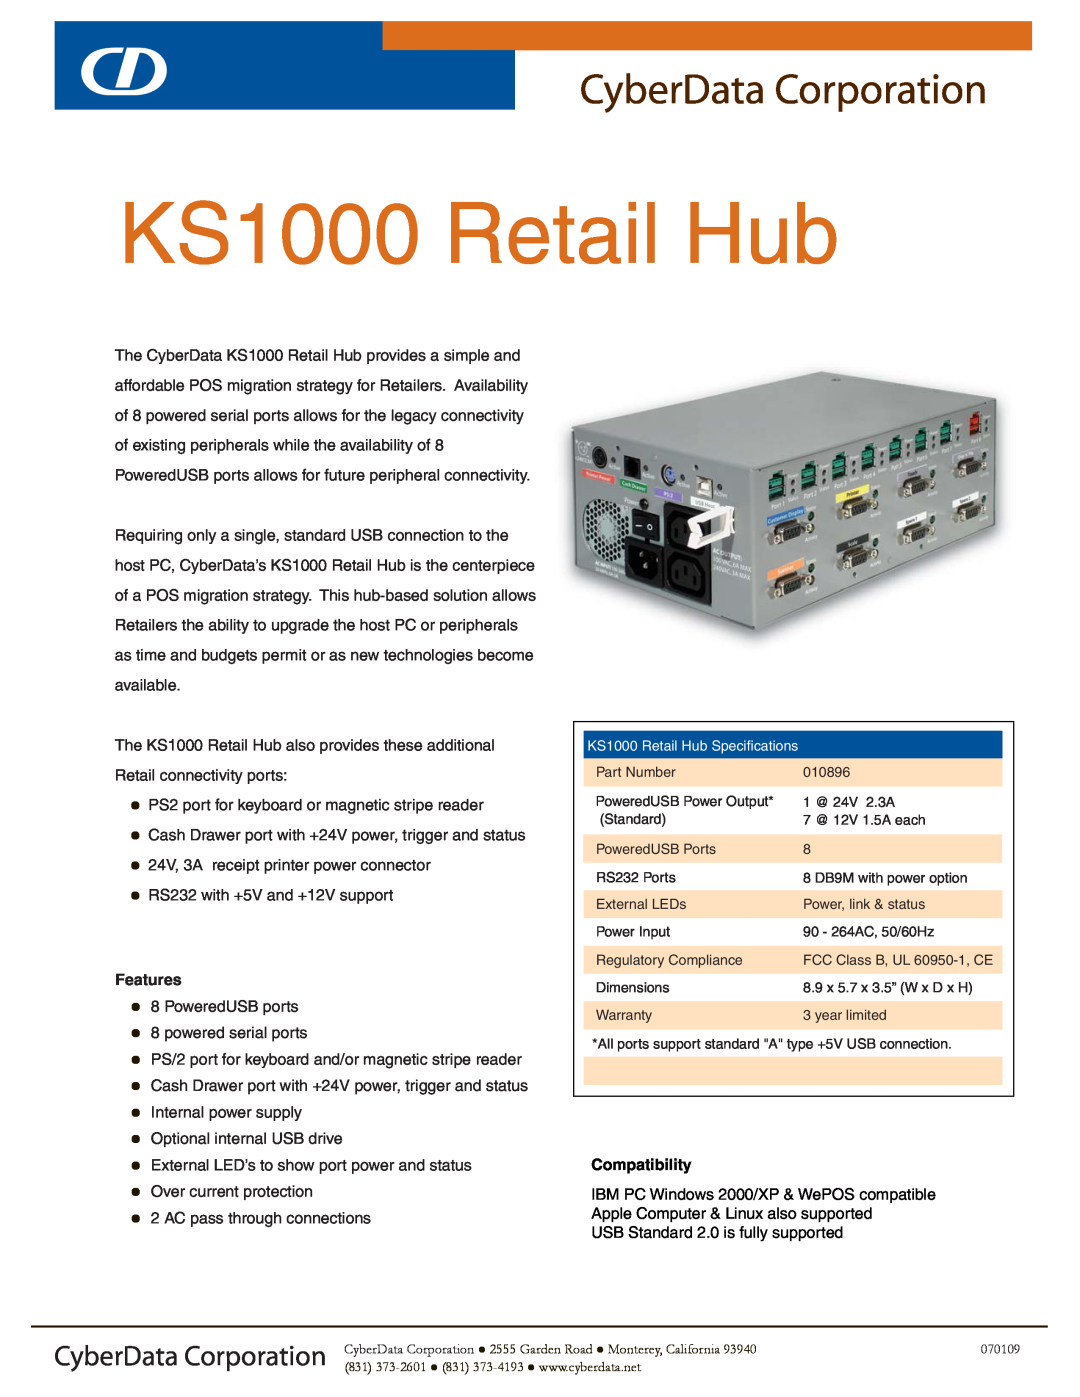 CyberData KS-1000 warranty CyberData Corporation, KS1000 Retail Hub, Features, Compatibility 